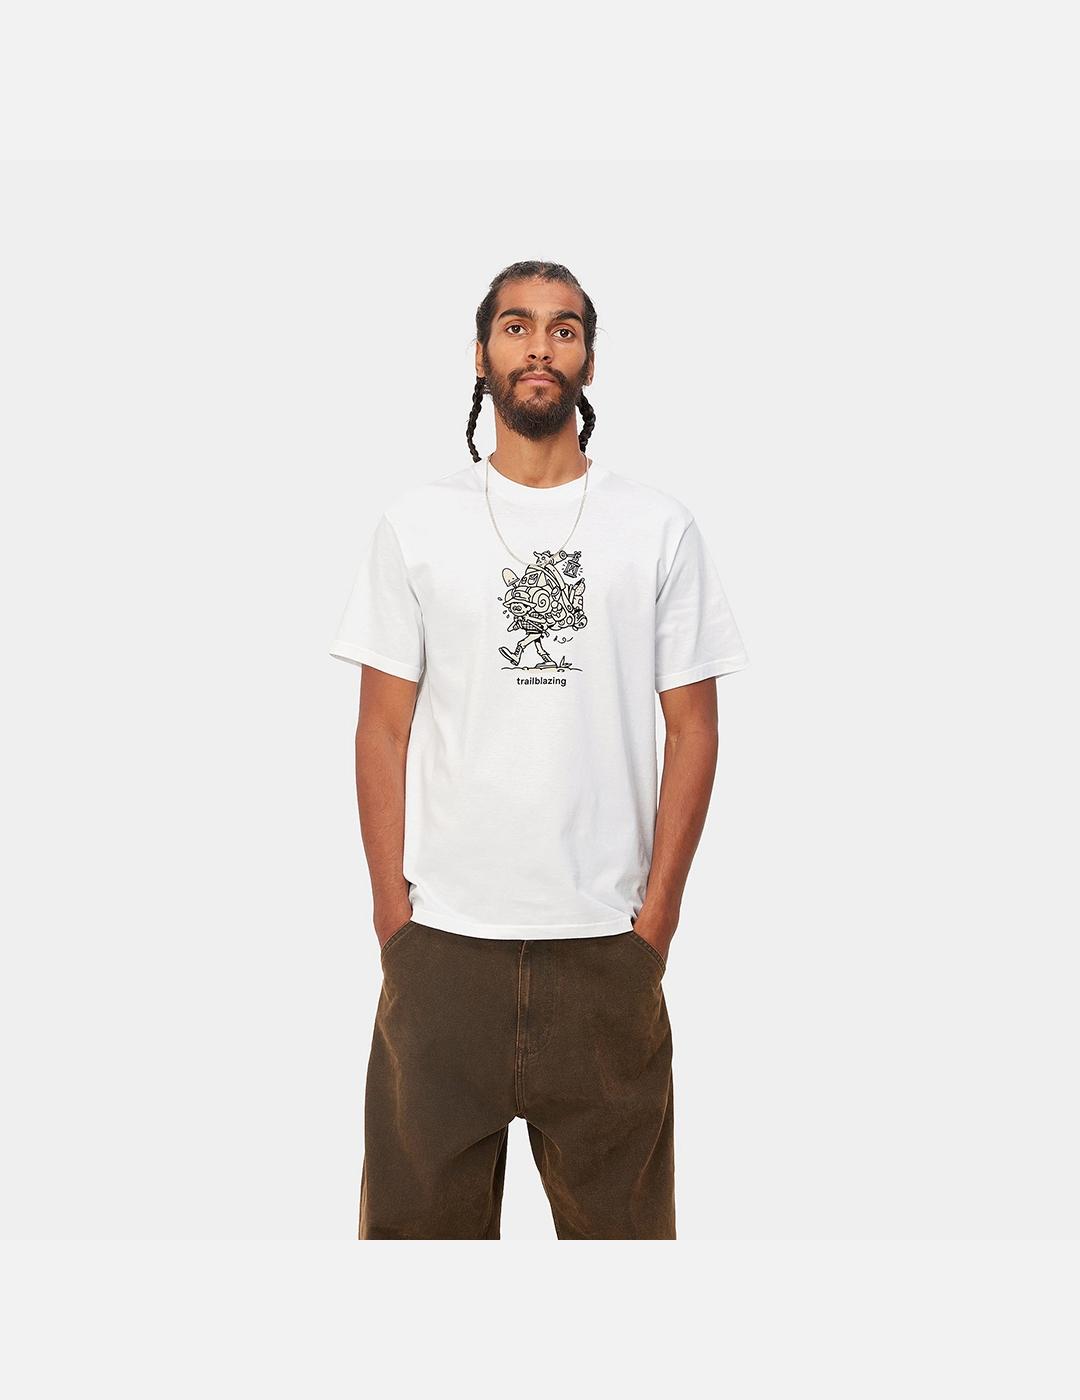 Camiseta Carhartt Wip S/S Trailblazer white de hombre